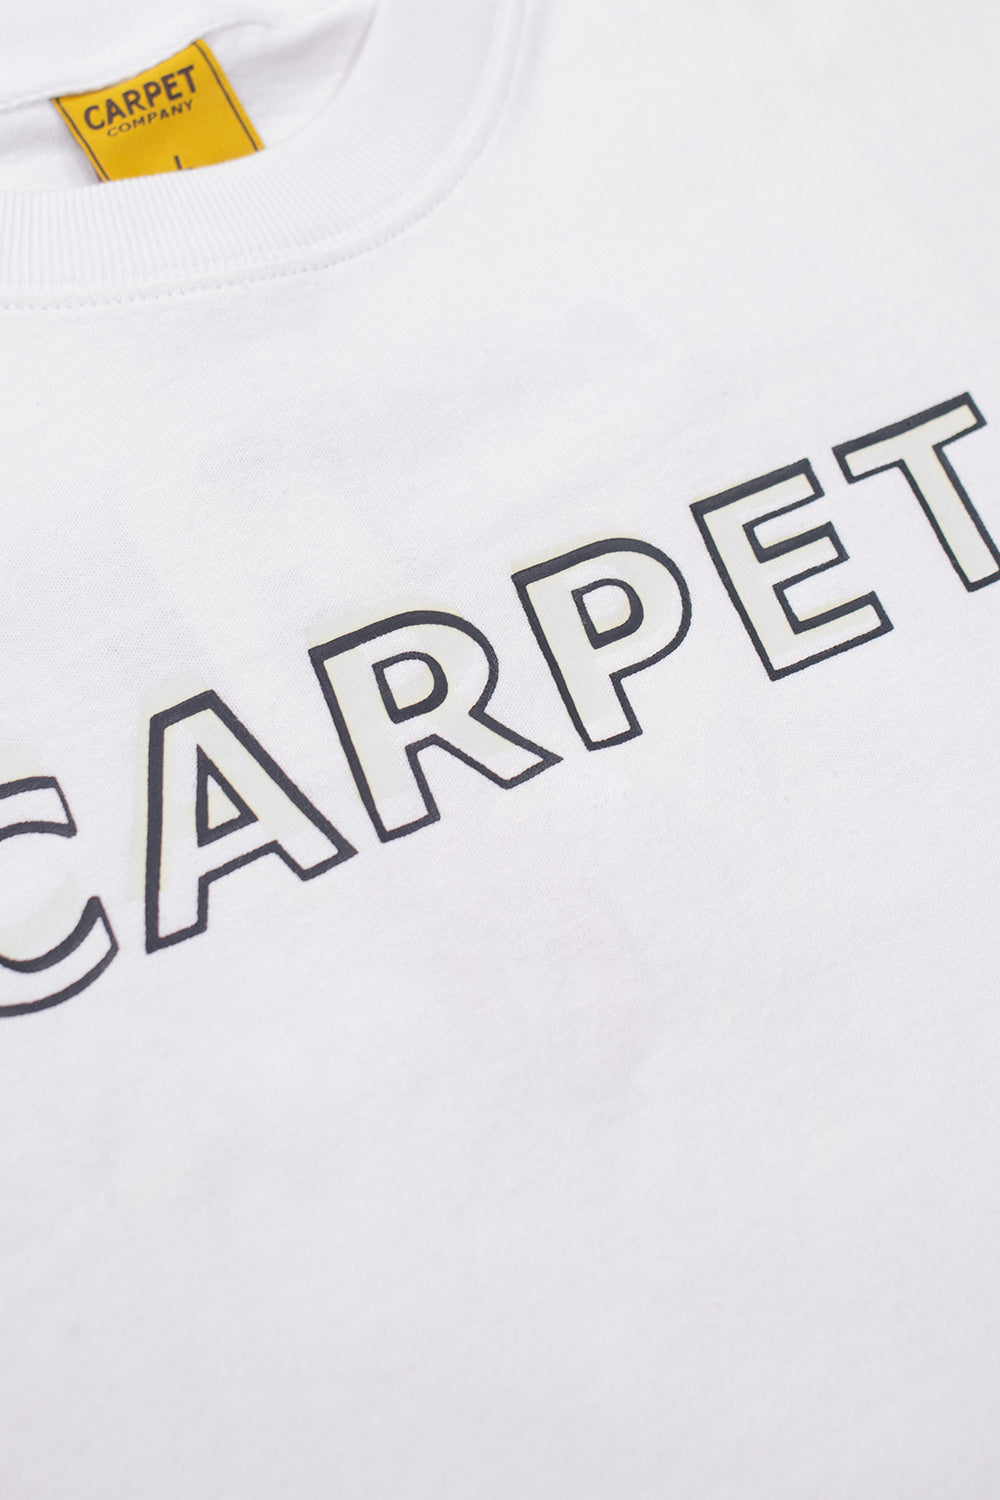 Carpet Company Missprint T-Shirt White (UV Print) - BONKERS